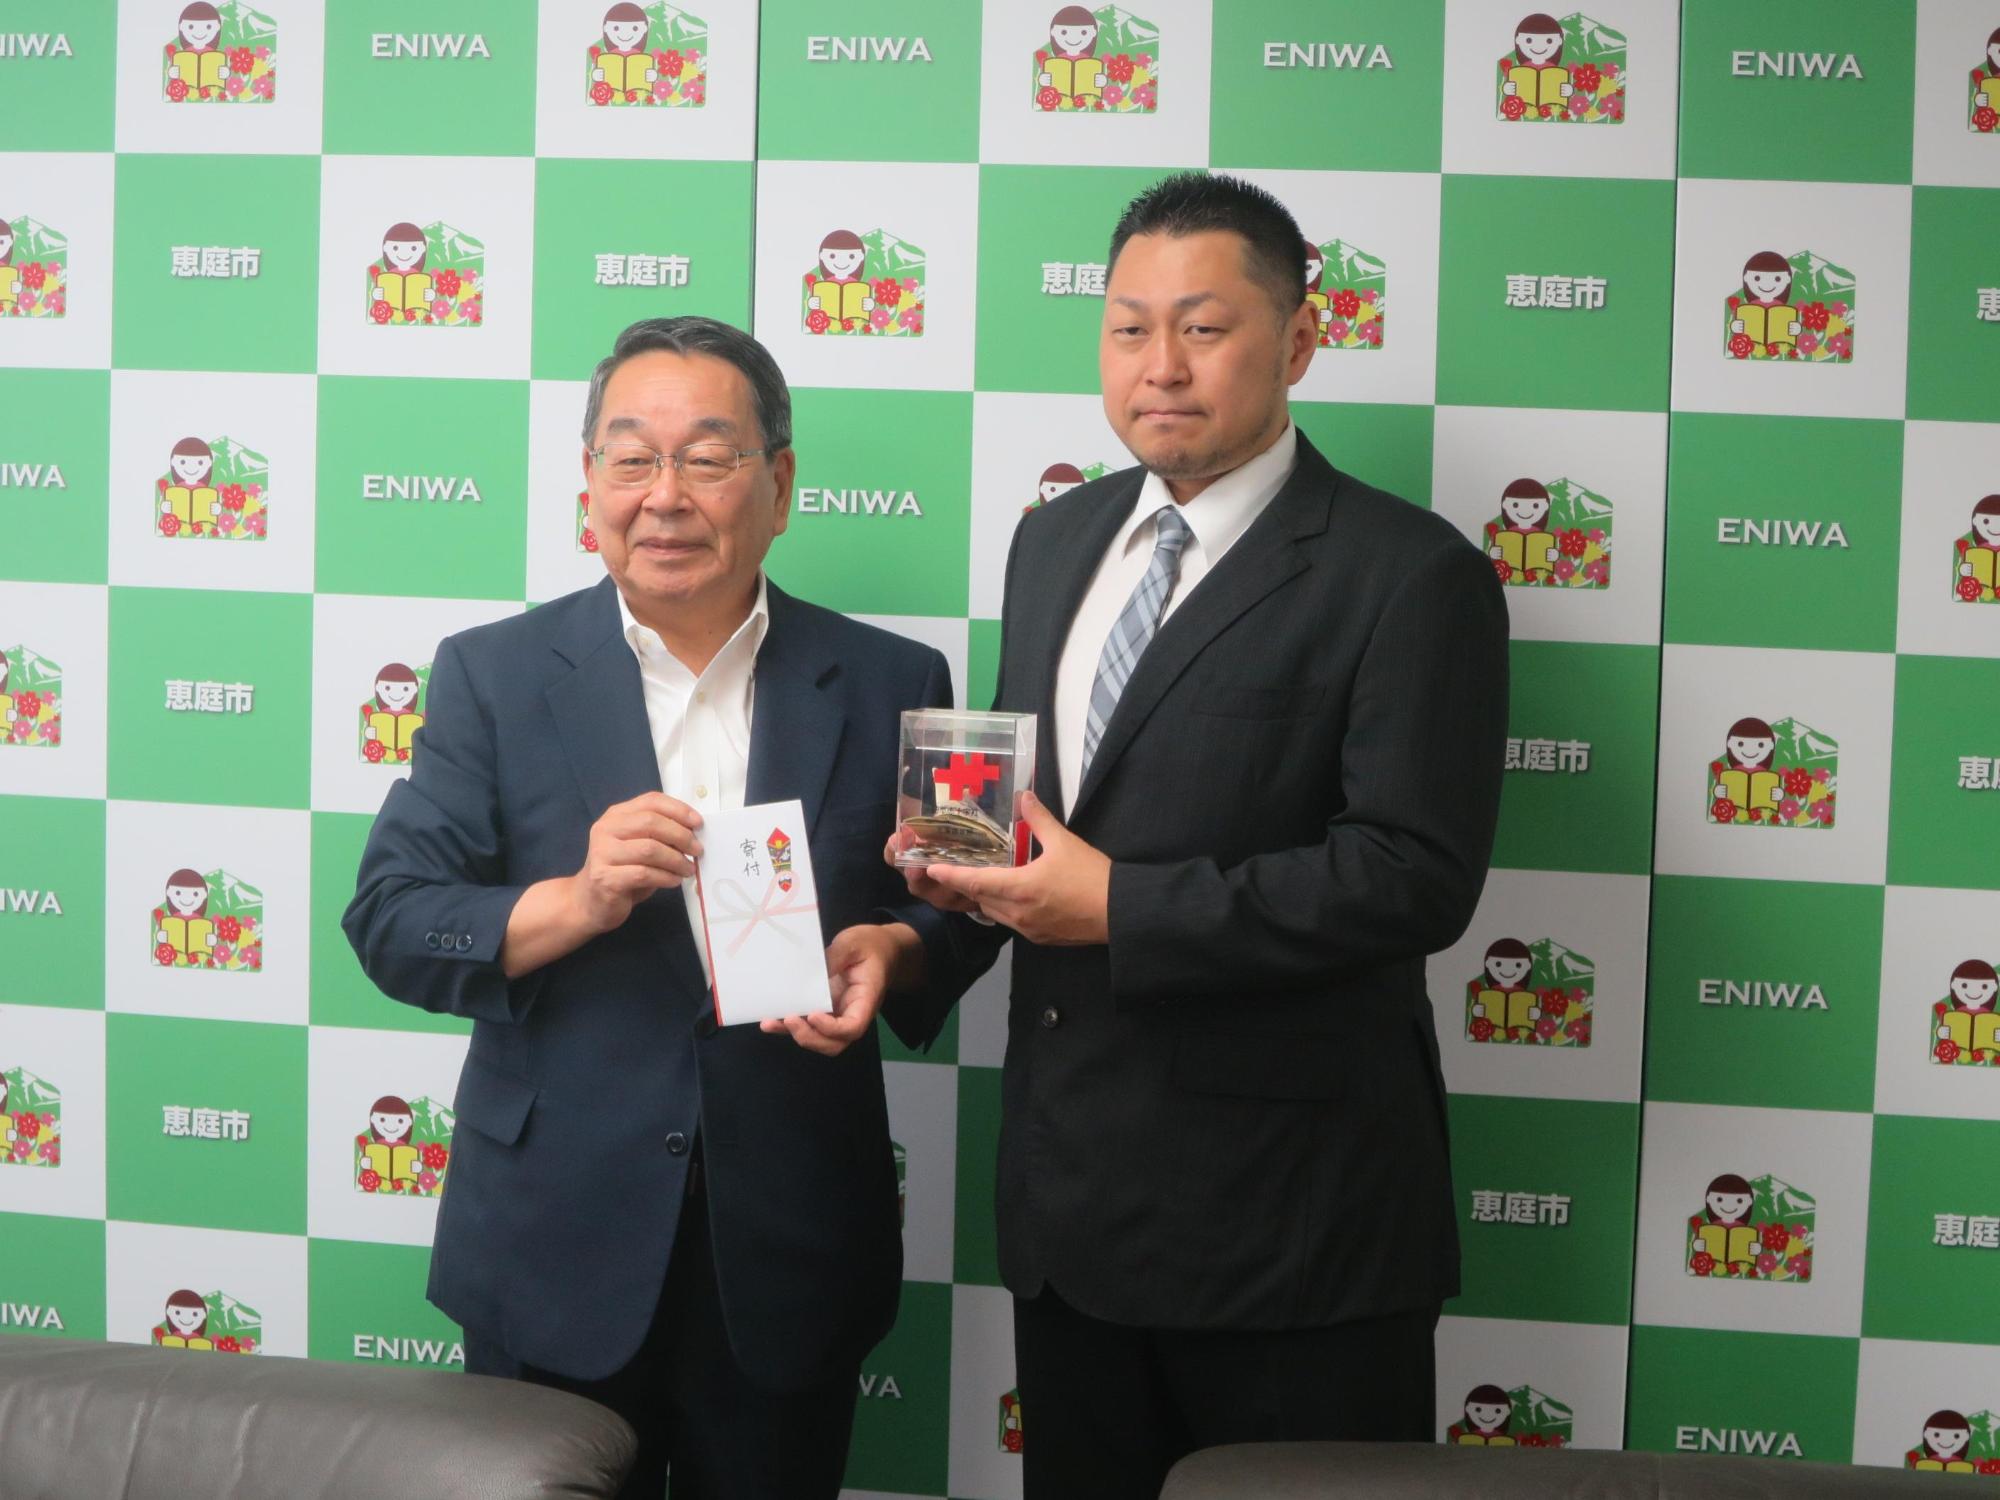 NPO武道教育センター優至会（酒井代表師範）と原田市長が記念撮影している写真